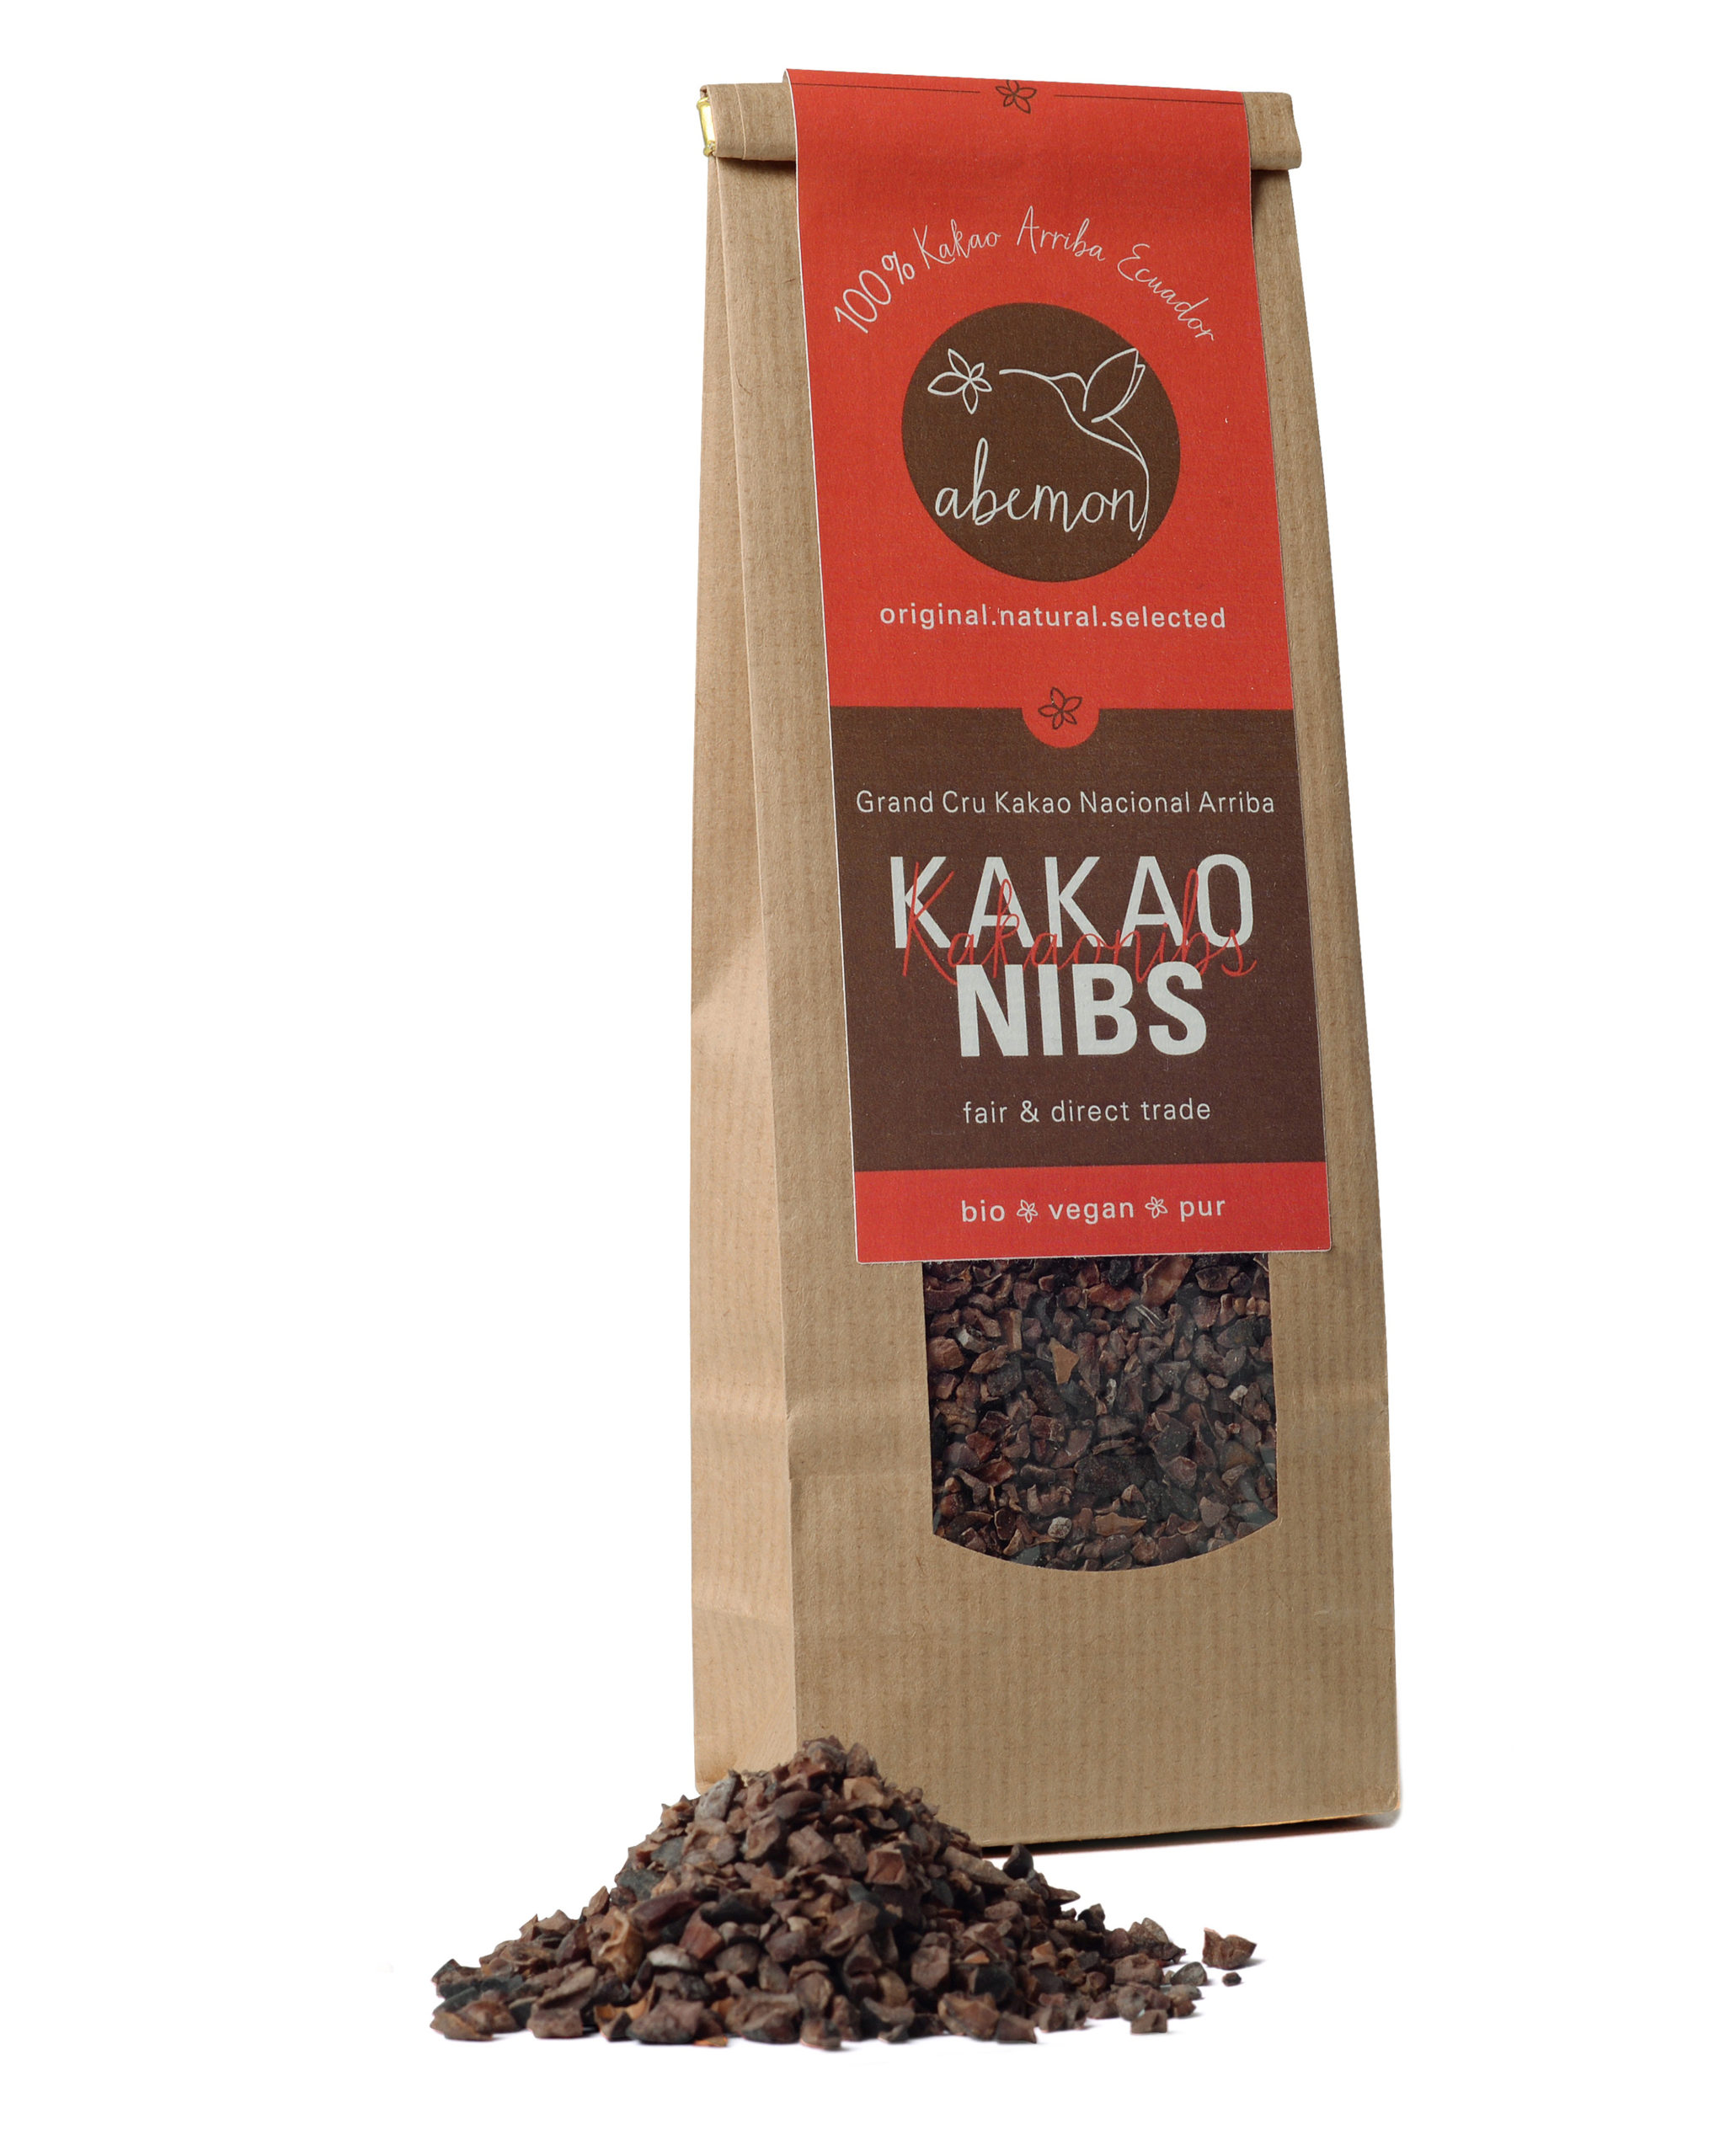 Kakao Nibs | Grand Cru Kakao Nacional Arriba